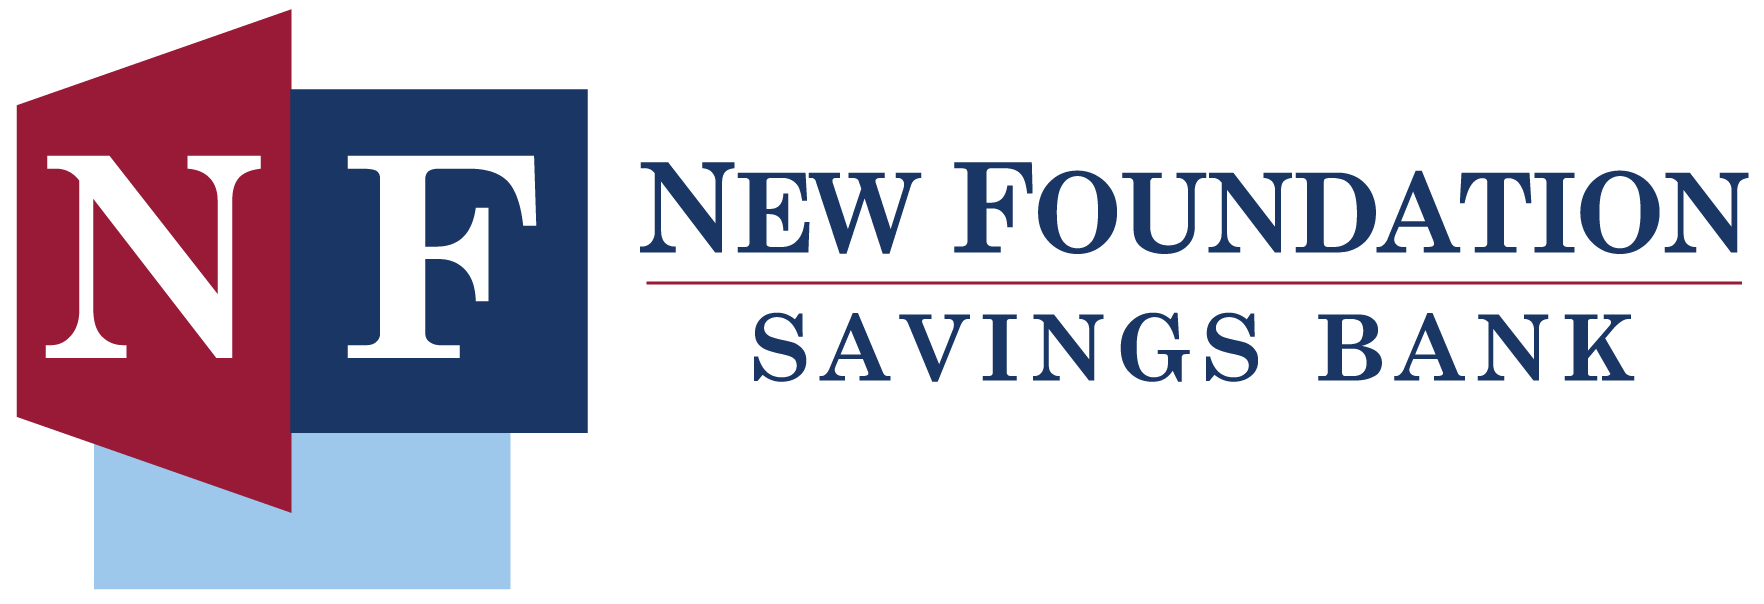 New Foundation Savings Bank Logo